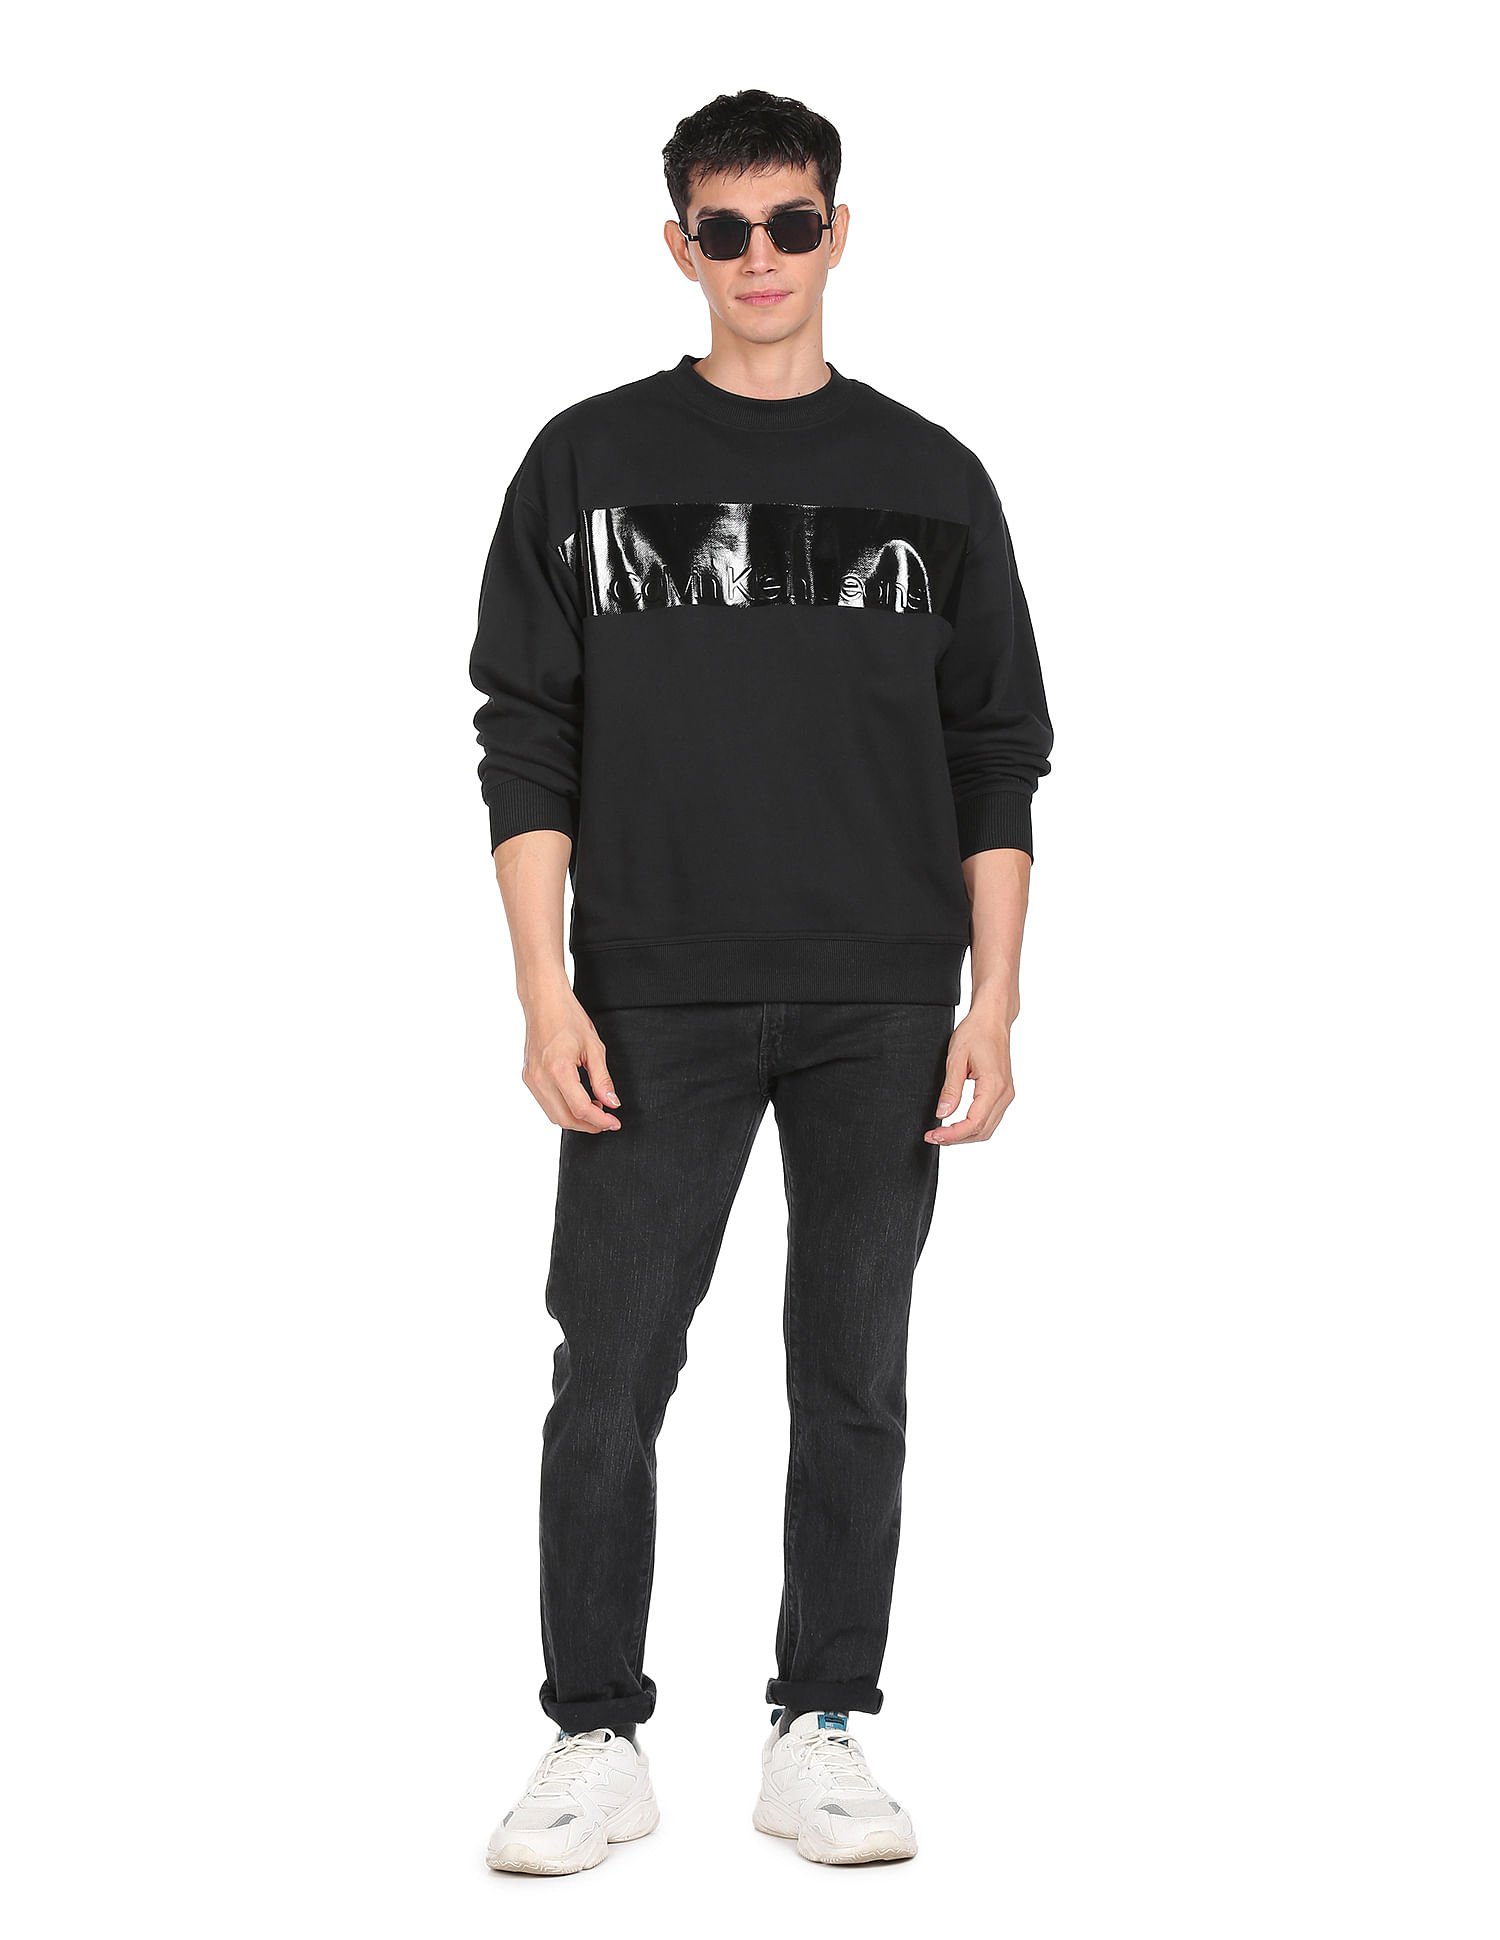 Buy Men Jeans Shiny Neck Black Klein Blocking Crew Institutional Sweatshirt Calvin